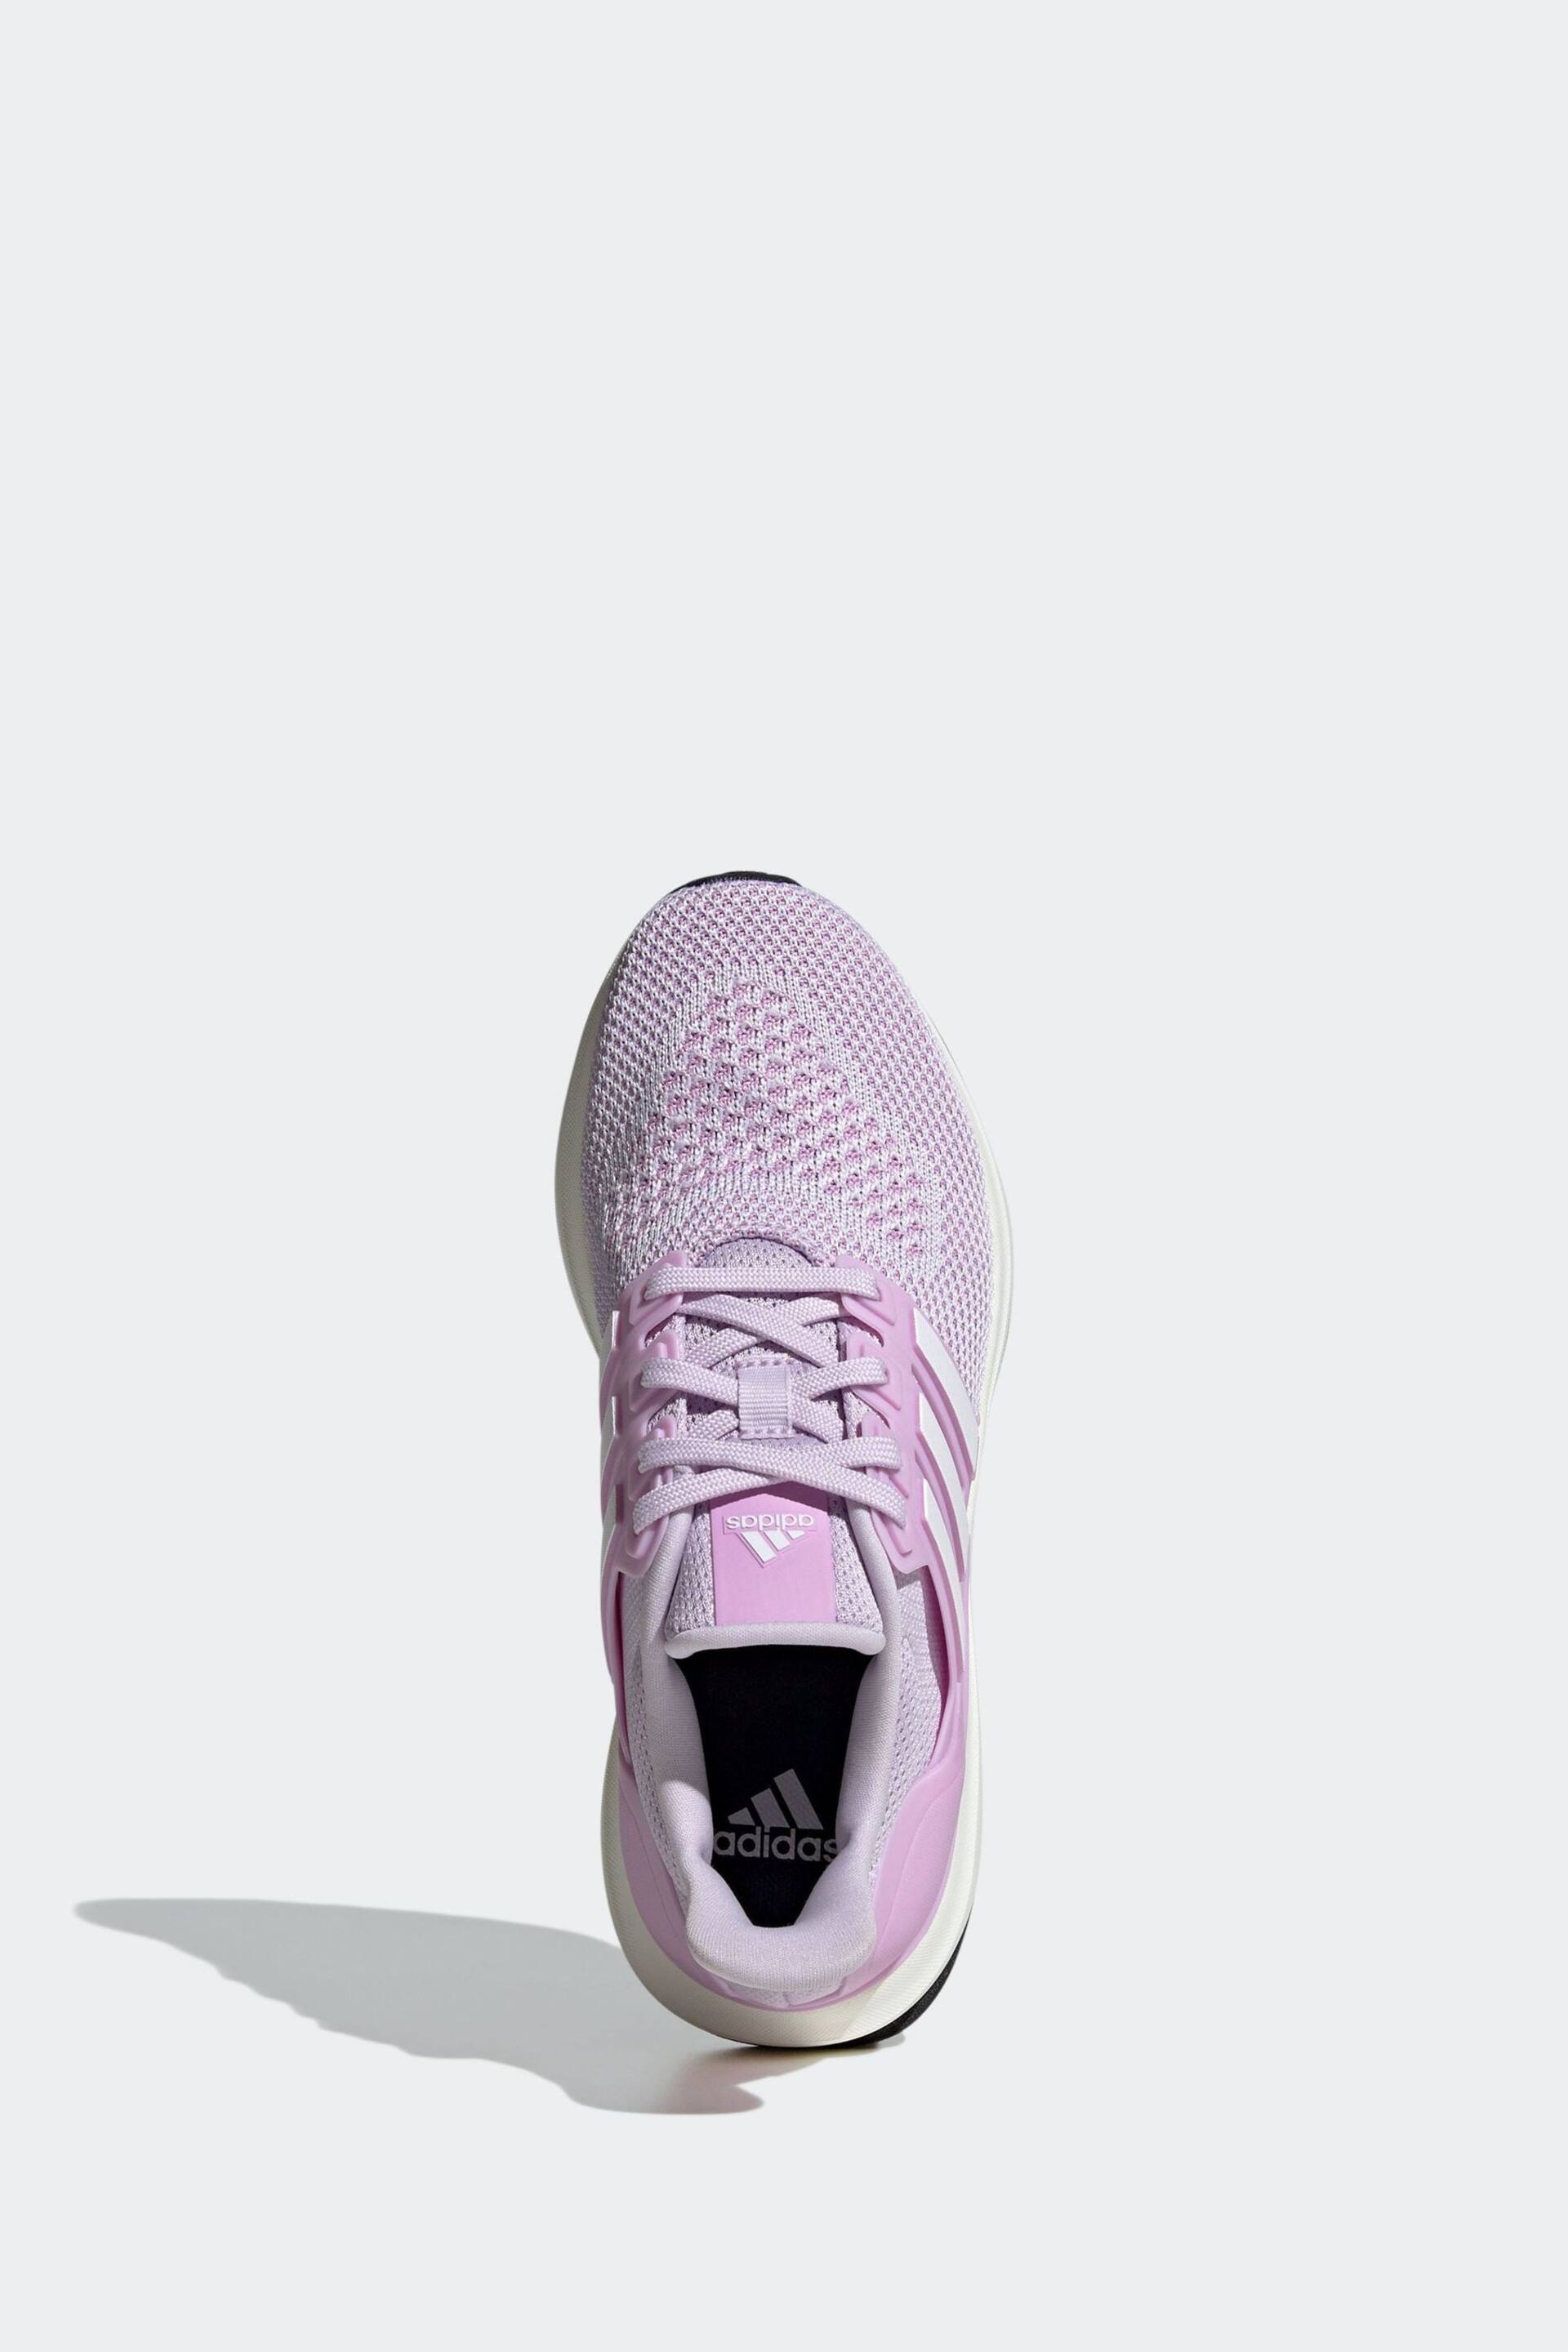 adidas Purple Sportswear Ubounce Dna Trainers - Image 6 of 9